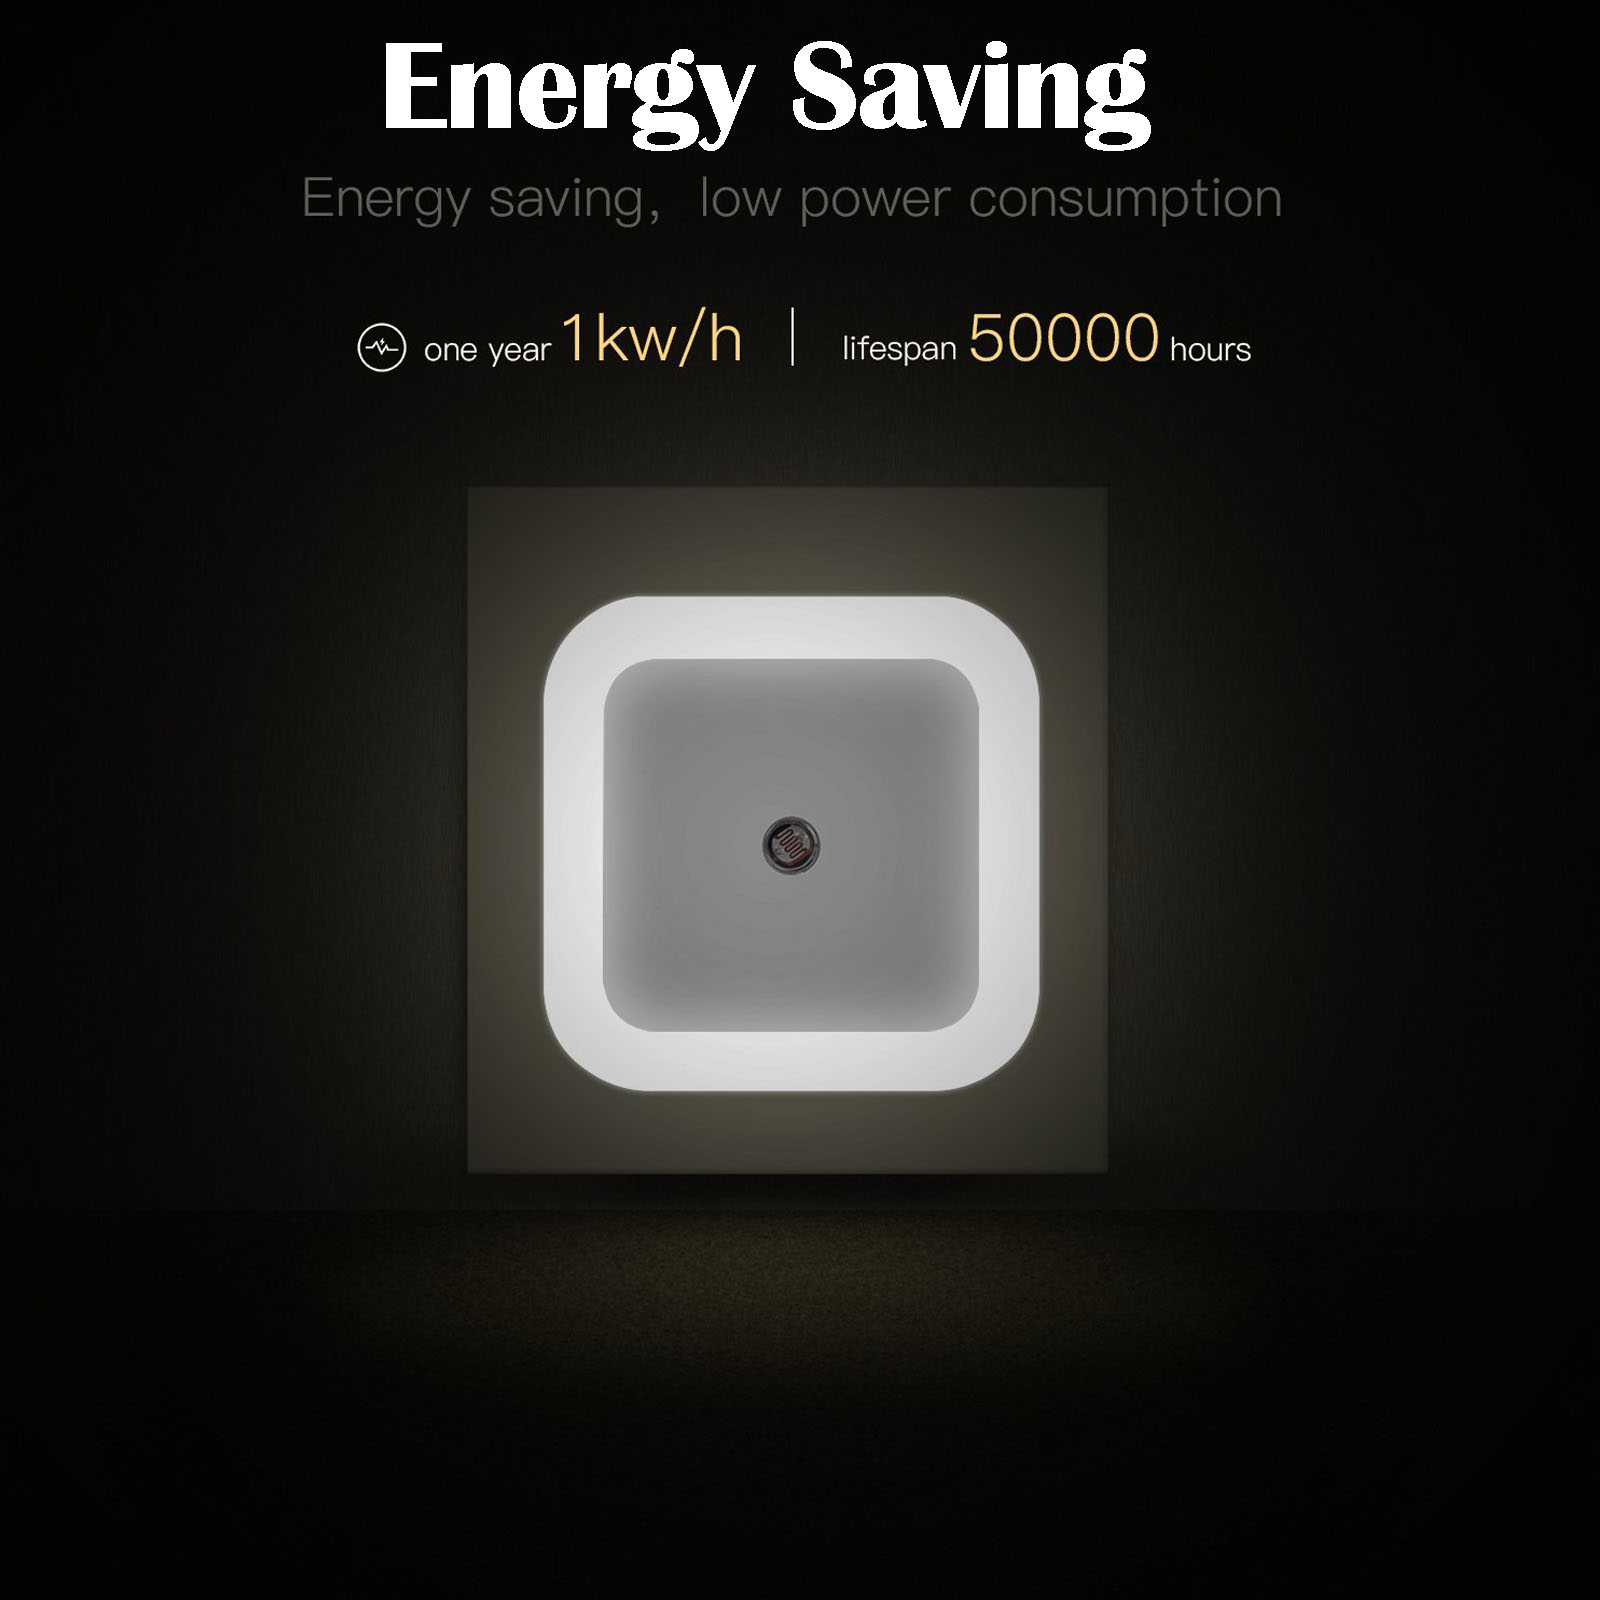 6pcs Auto Light Sensor LED Room Night Light Smart Plug in Wall Lamp for Home Bedroom Kitchen - image 5 of 8